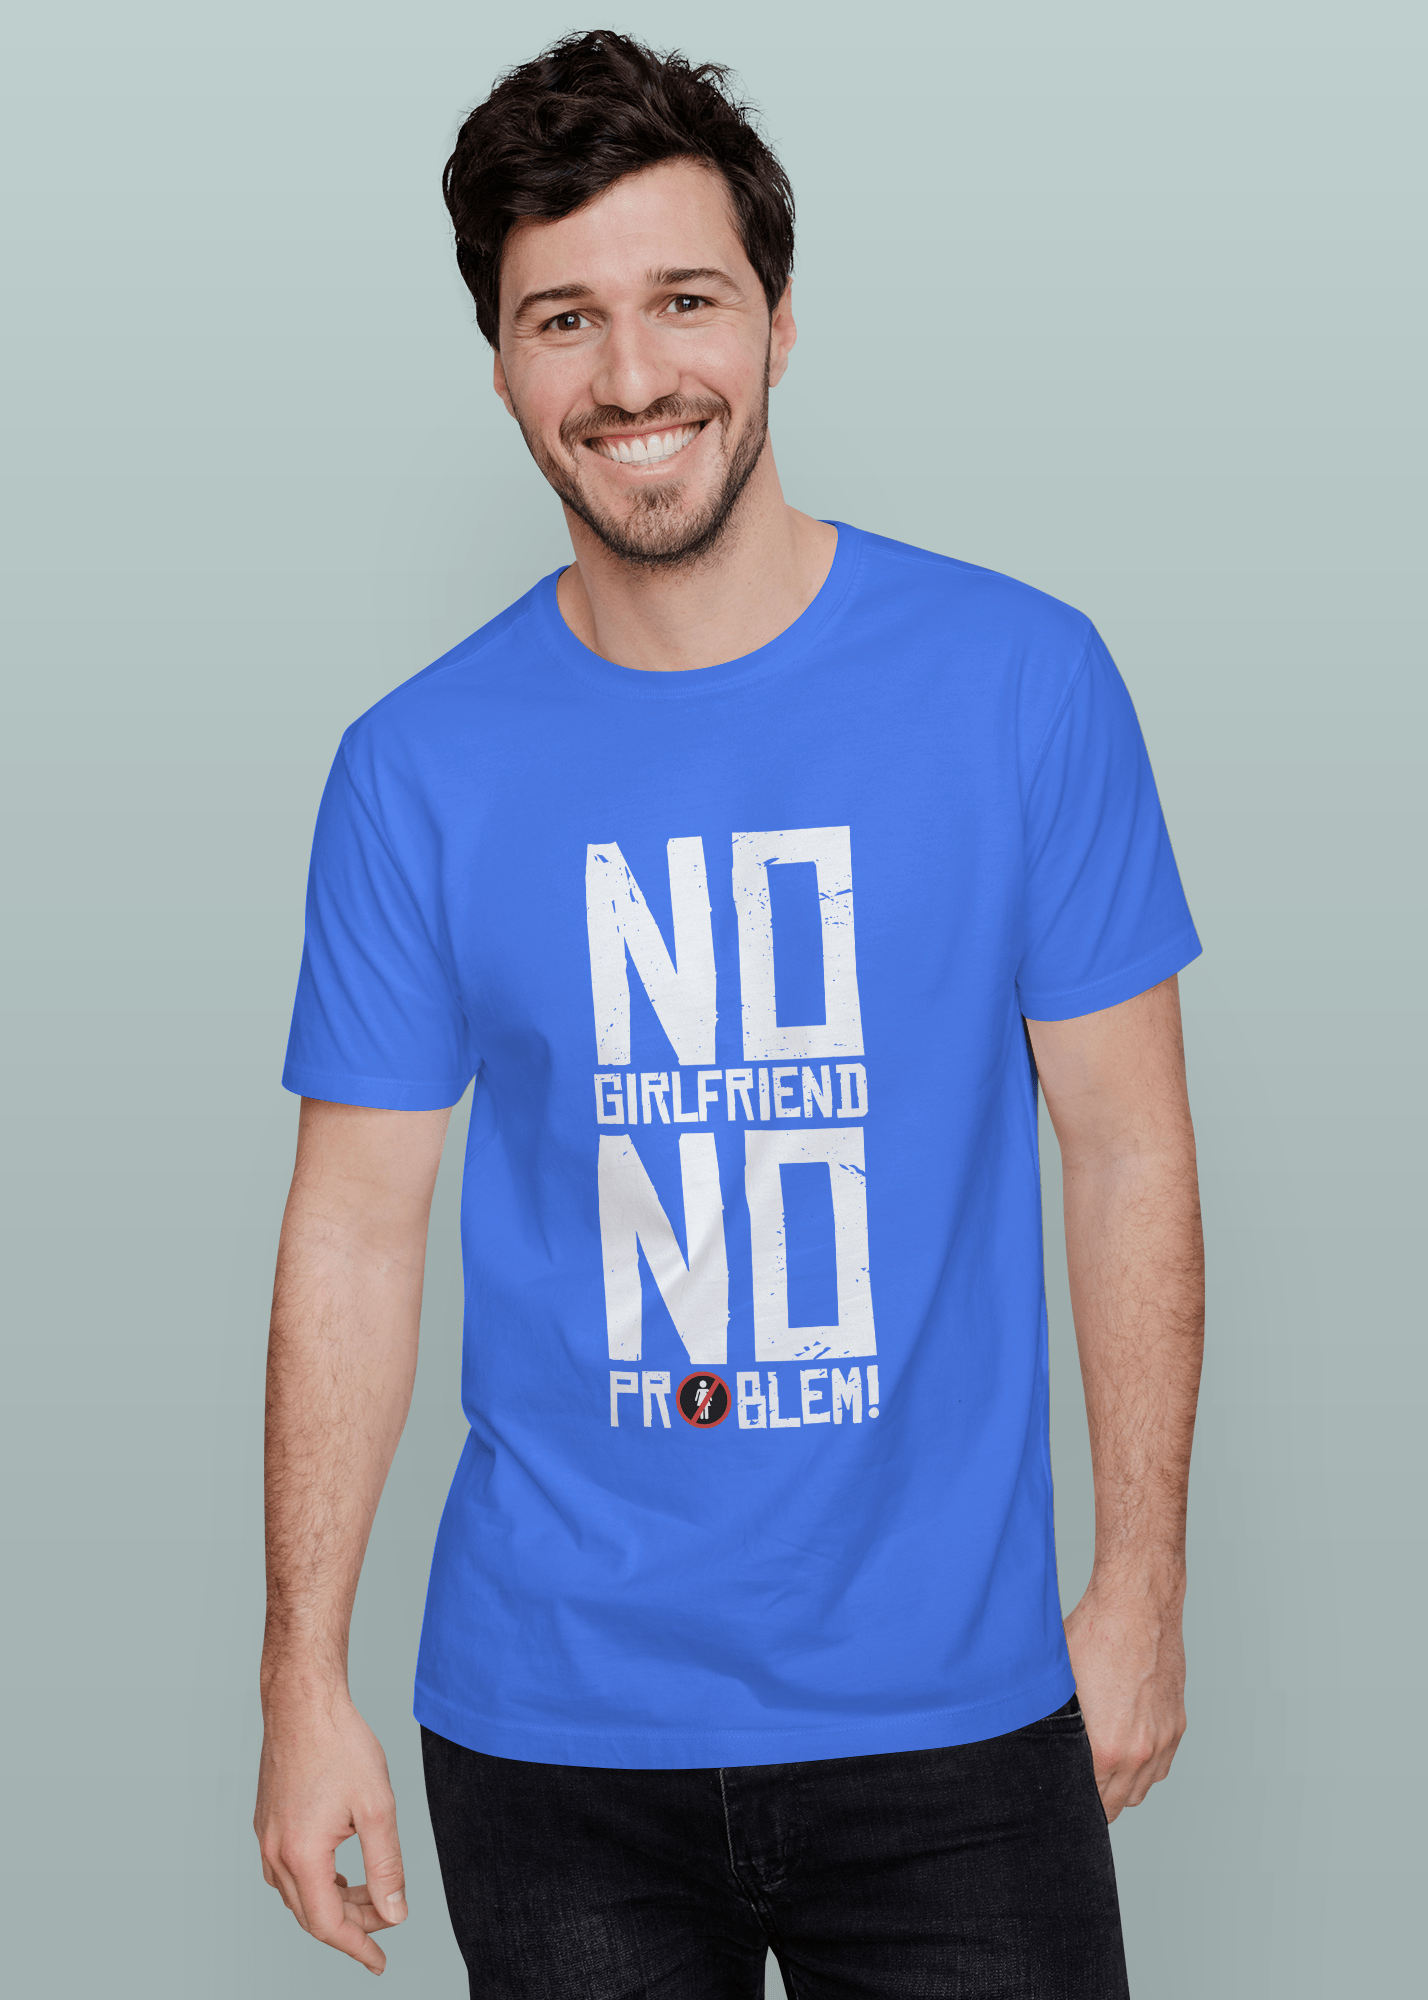 No Girlfriend No Problem Printed Half Sleeve Premium Cotton T-shirt For Men